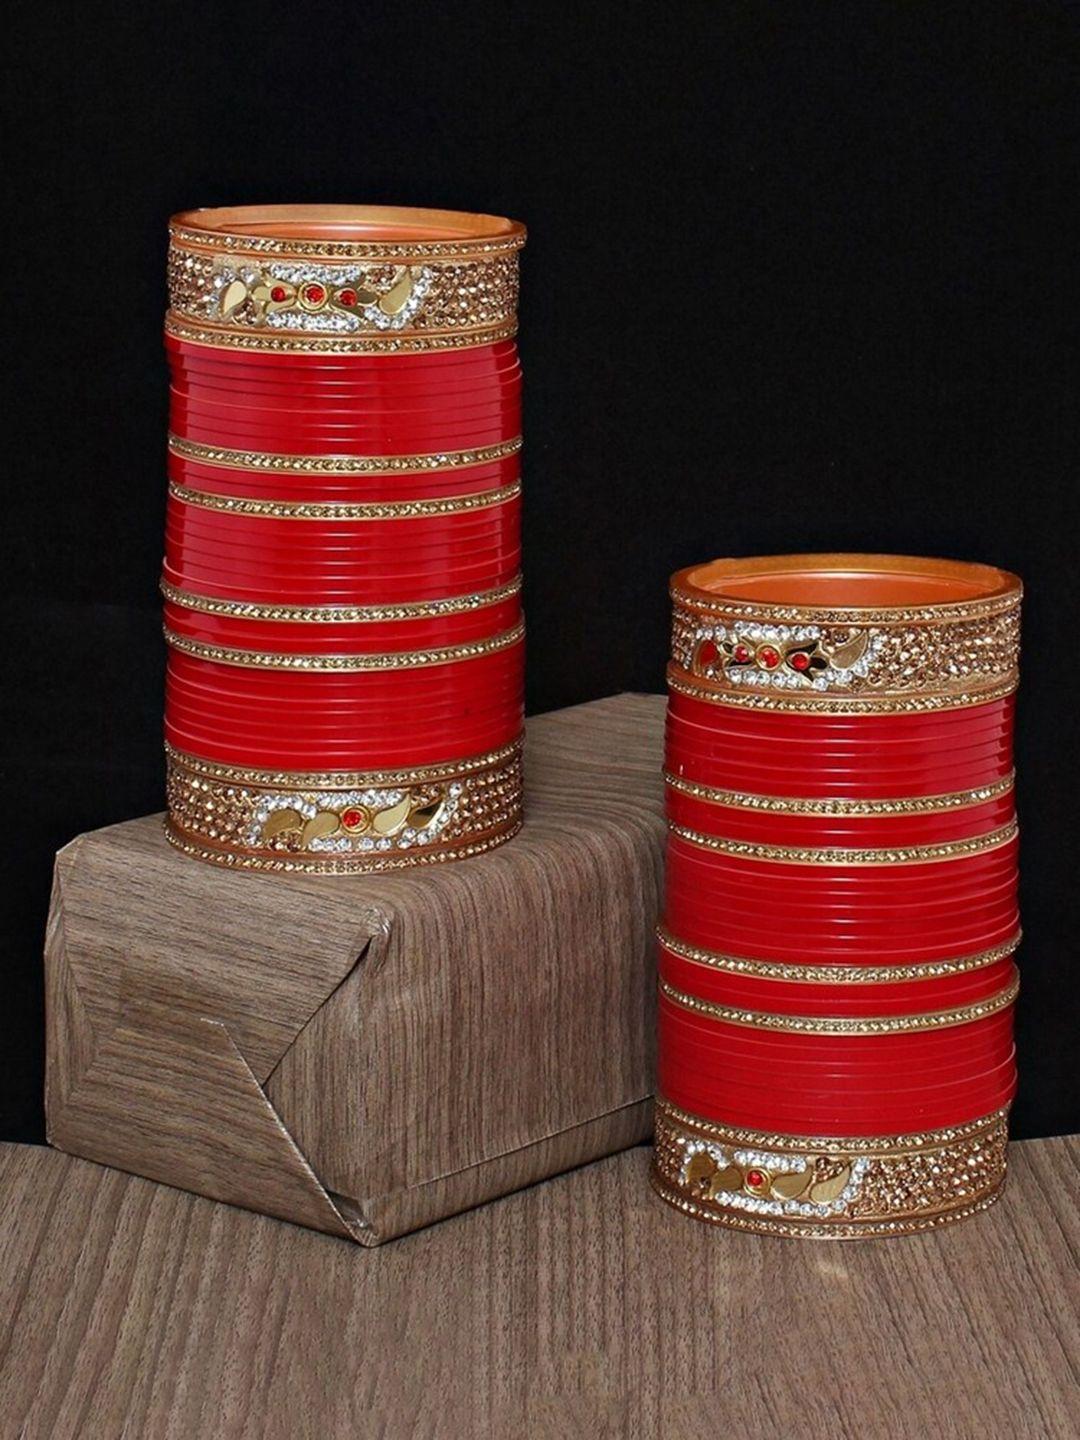 lucky jewellery red cz & kundan studded punjabi bridal bangle set